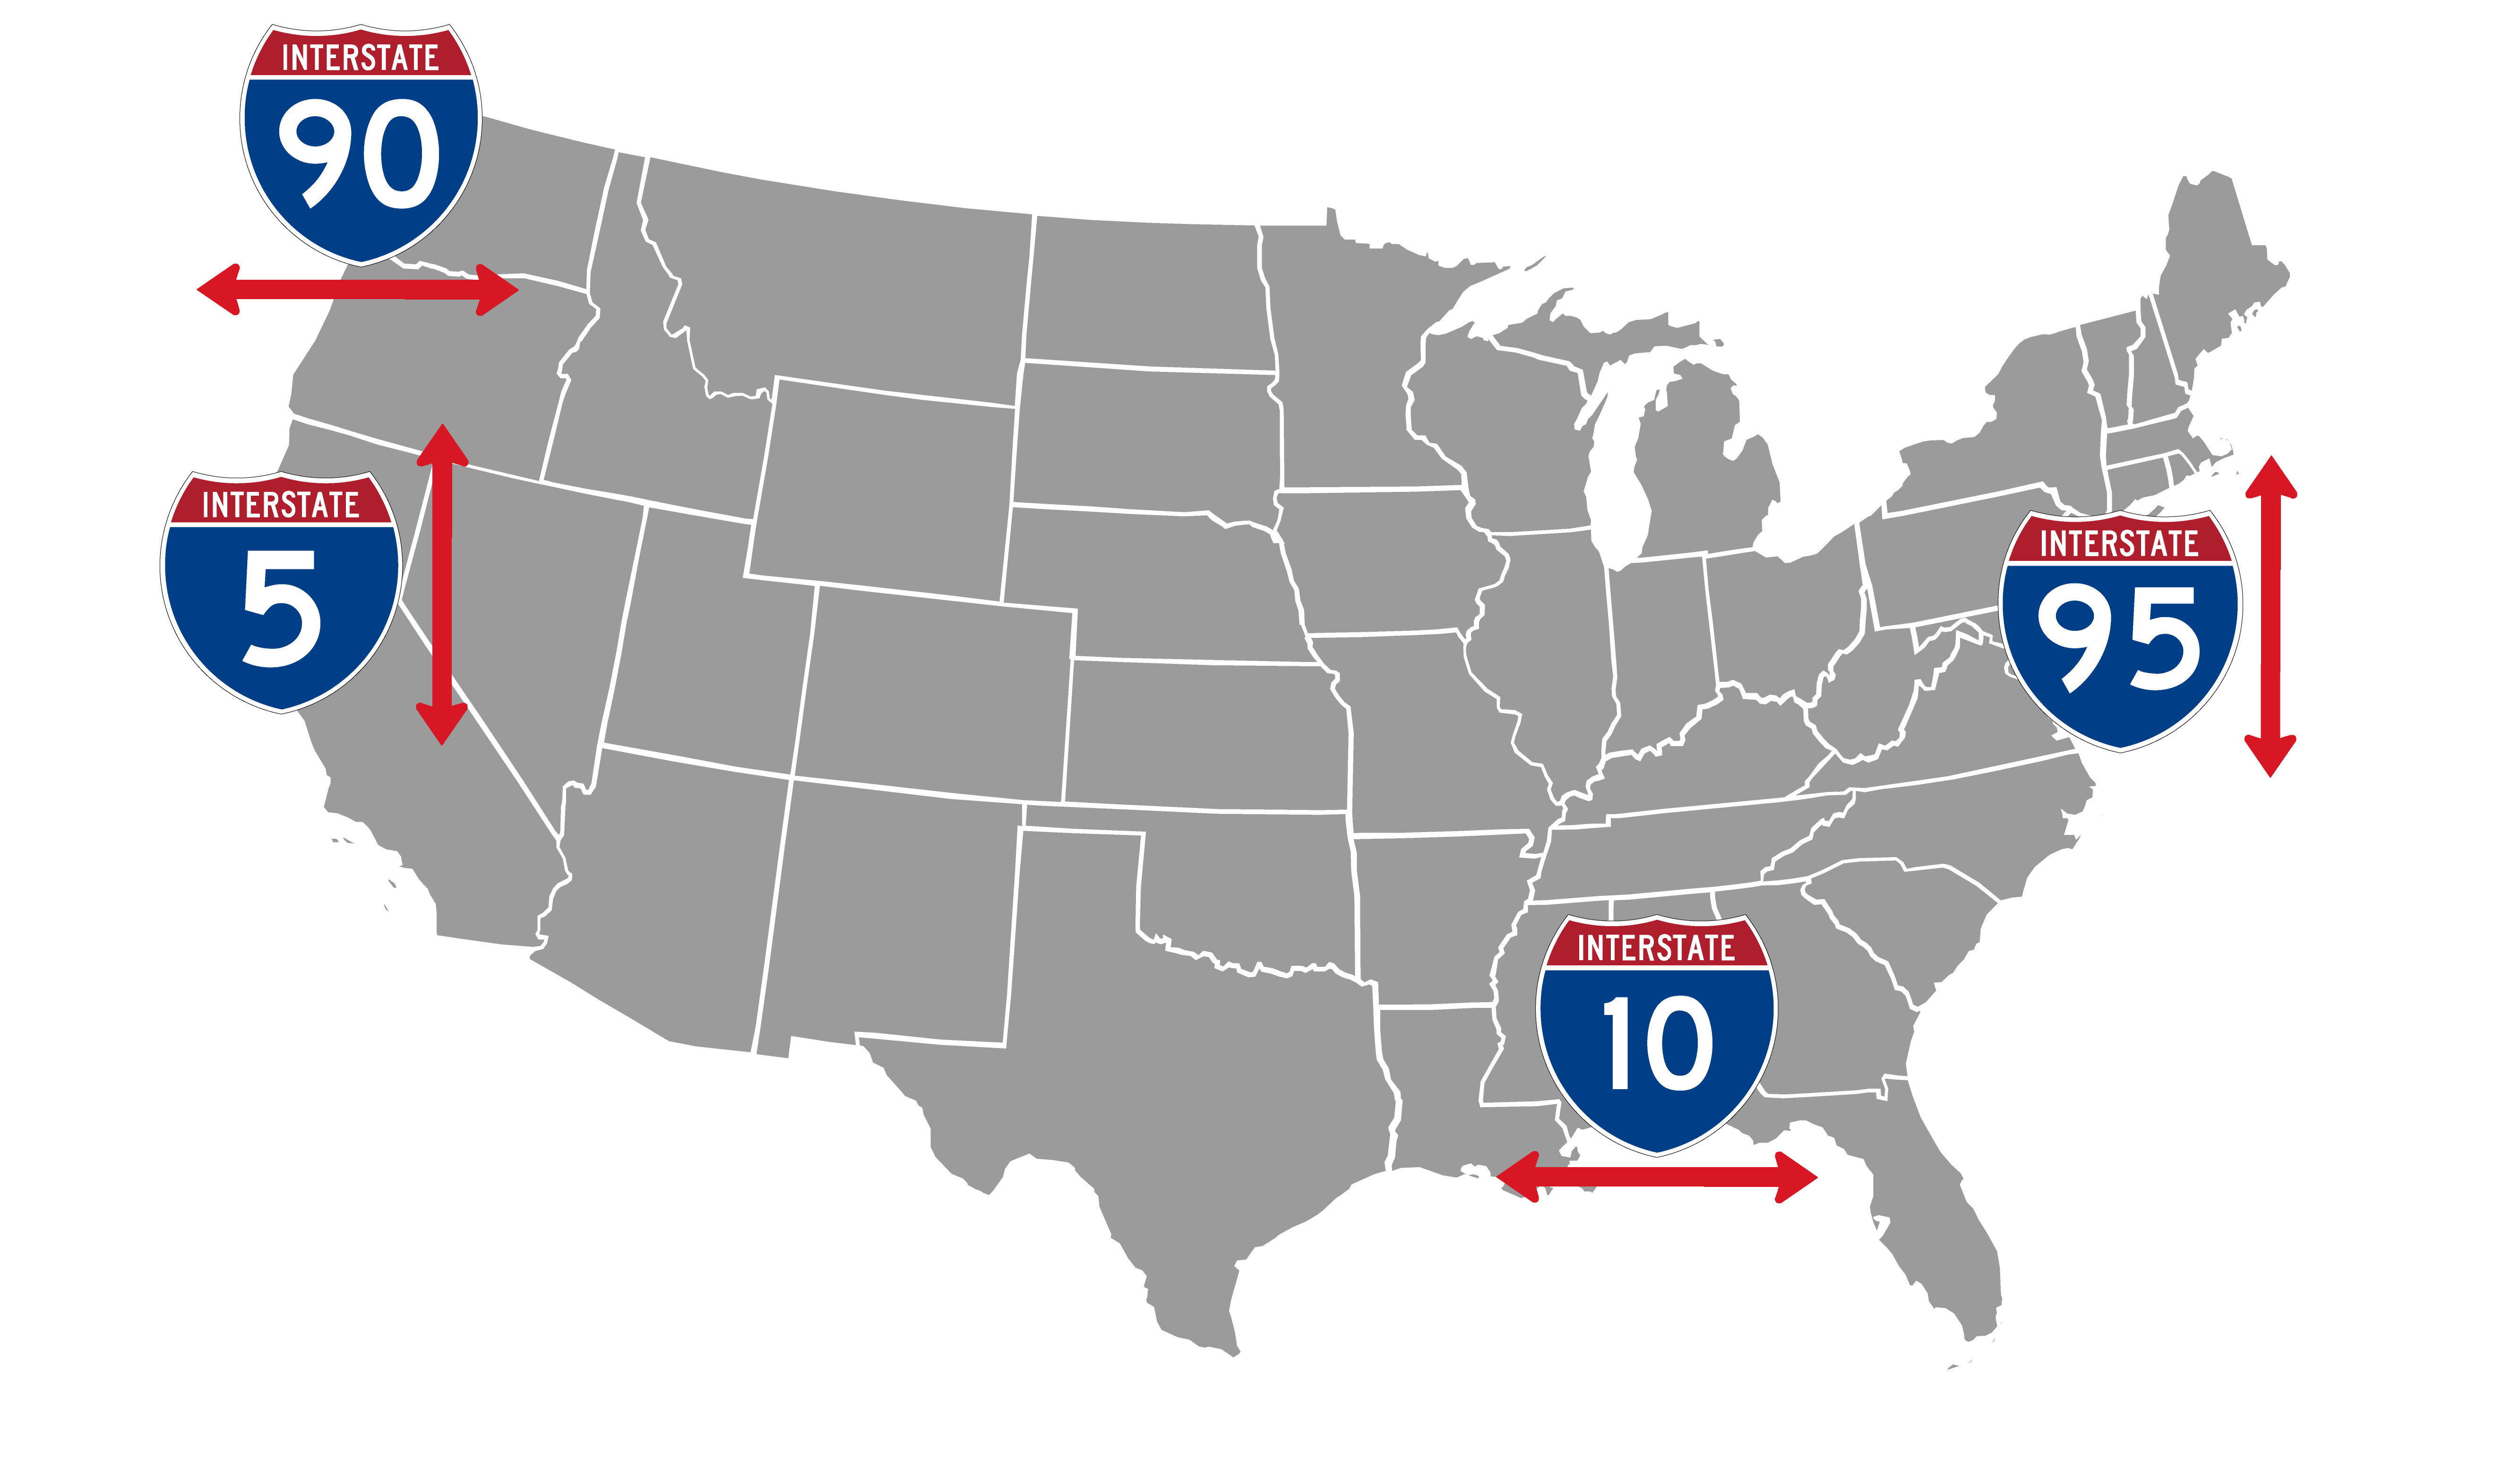 American Highways 101 Visual Guide to U.S. Road Sign Designs